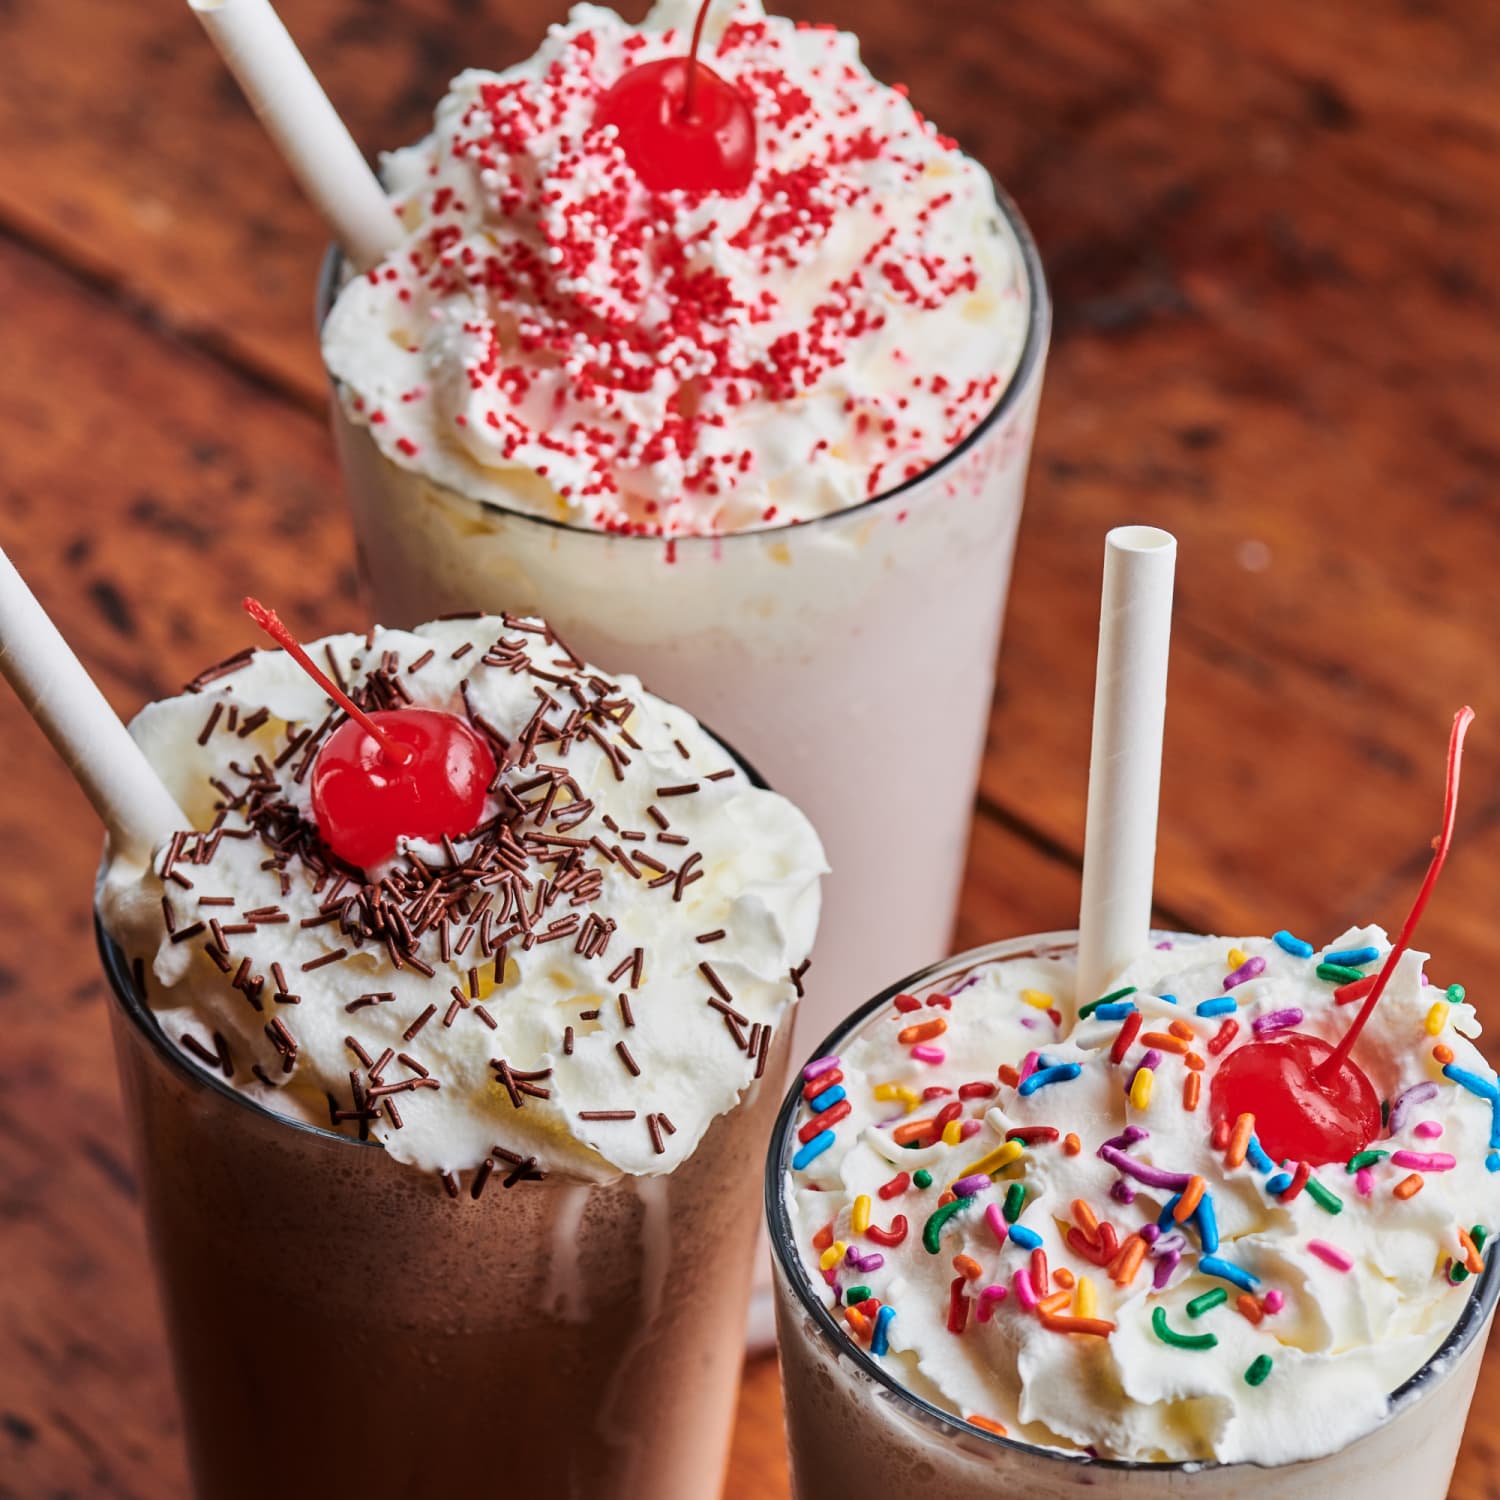 milkshake takeaway cup - Google Search